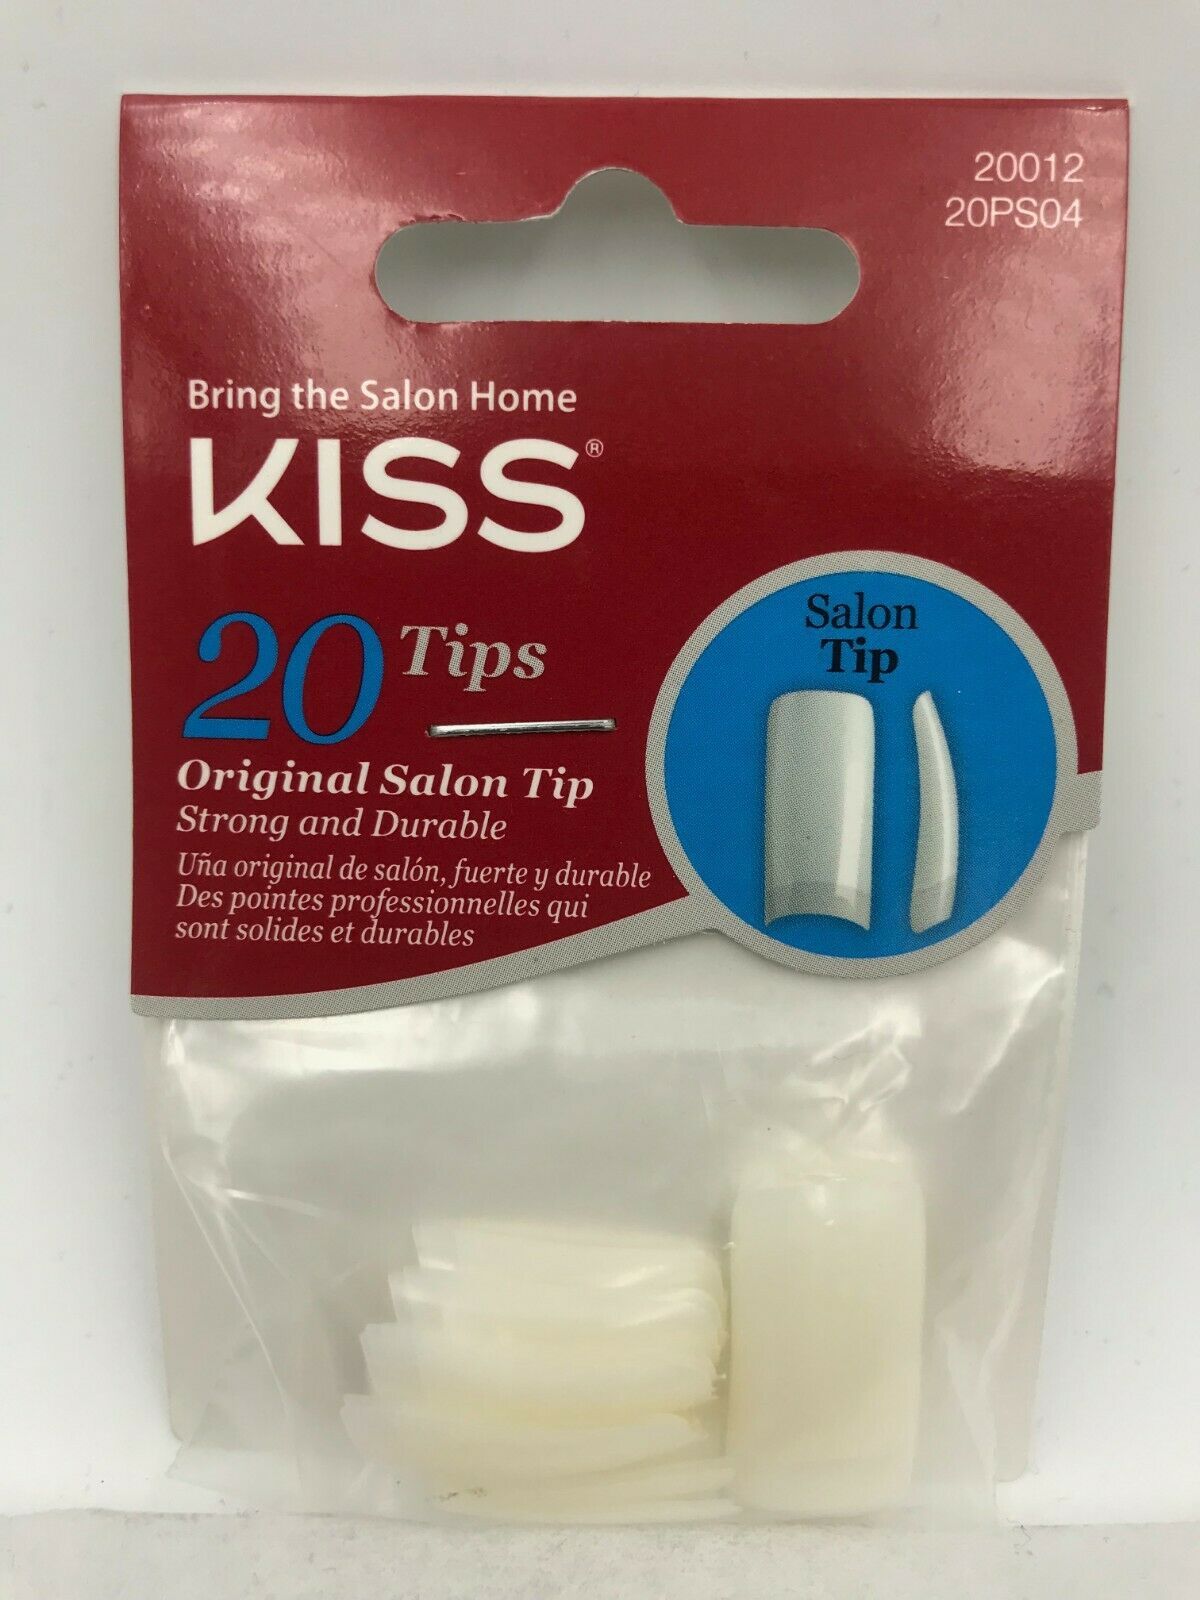 KISS SALON TIP 20 NAIL TIPS ORIGINAL STYLE SALON TIP STRONG AND DURABLE #20PS04 - $1.29